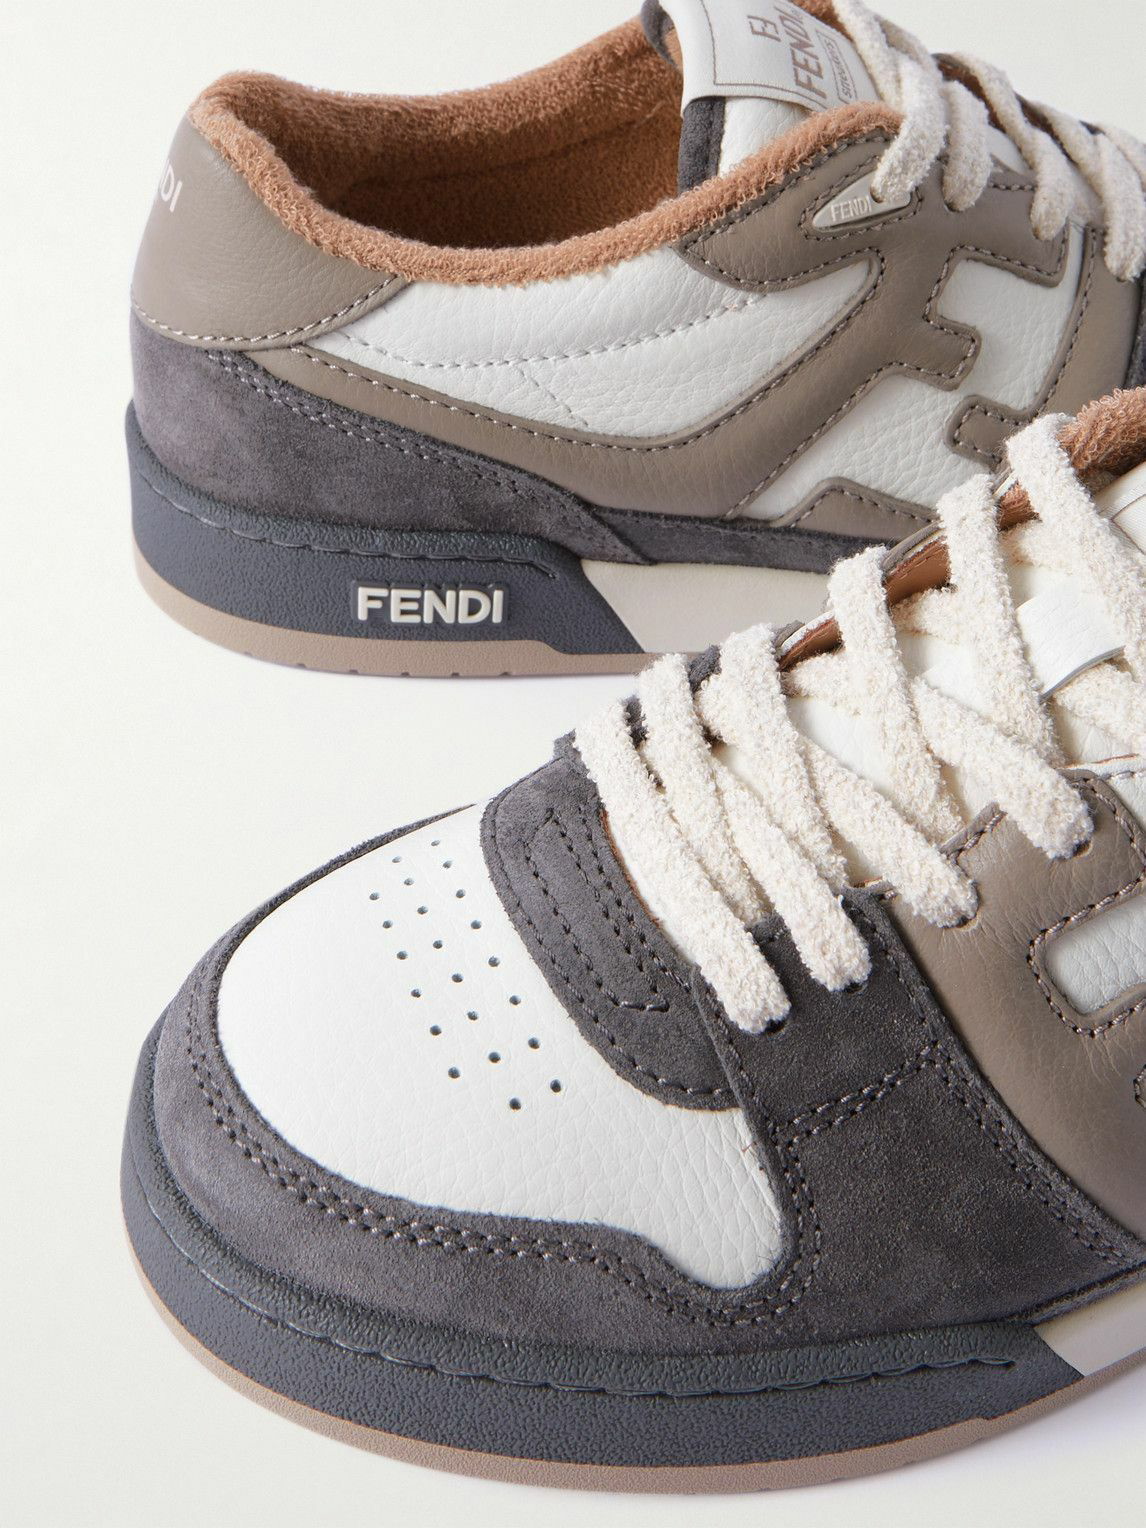 Fendi - Fendi Match Suede-Trimmed Leather Sneakers - Gray Fendi